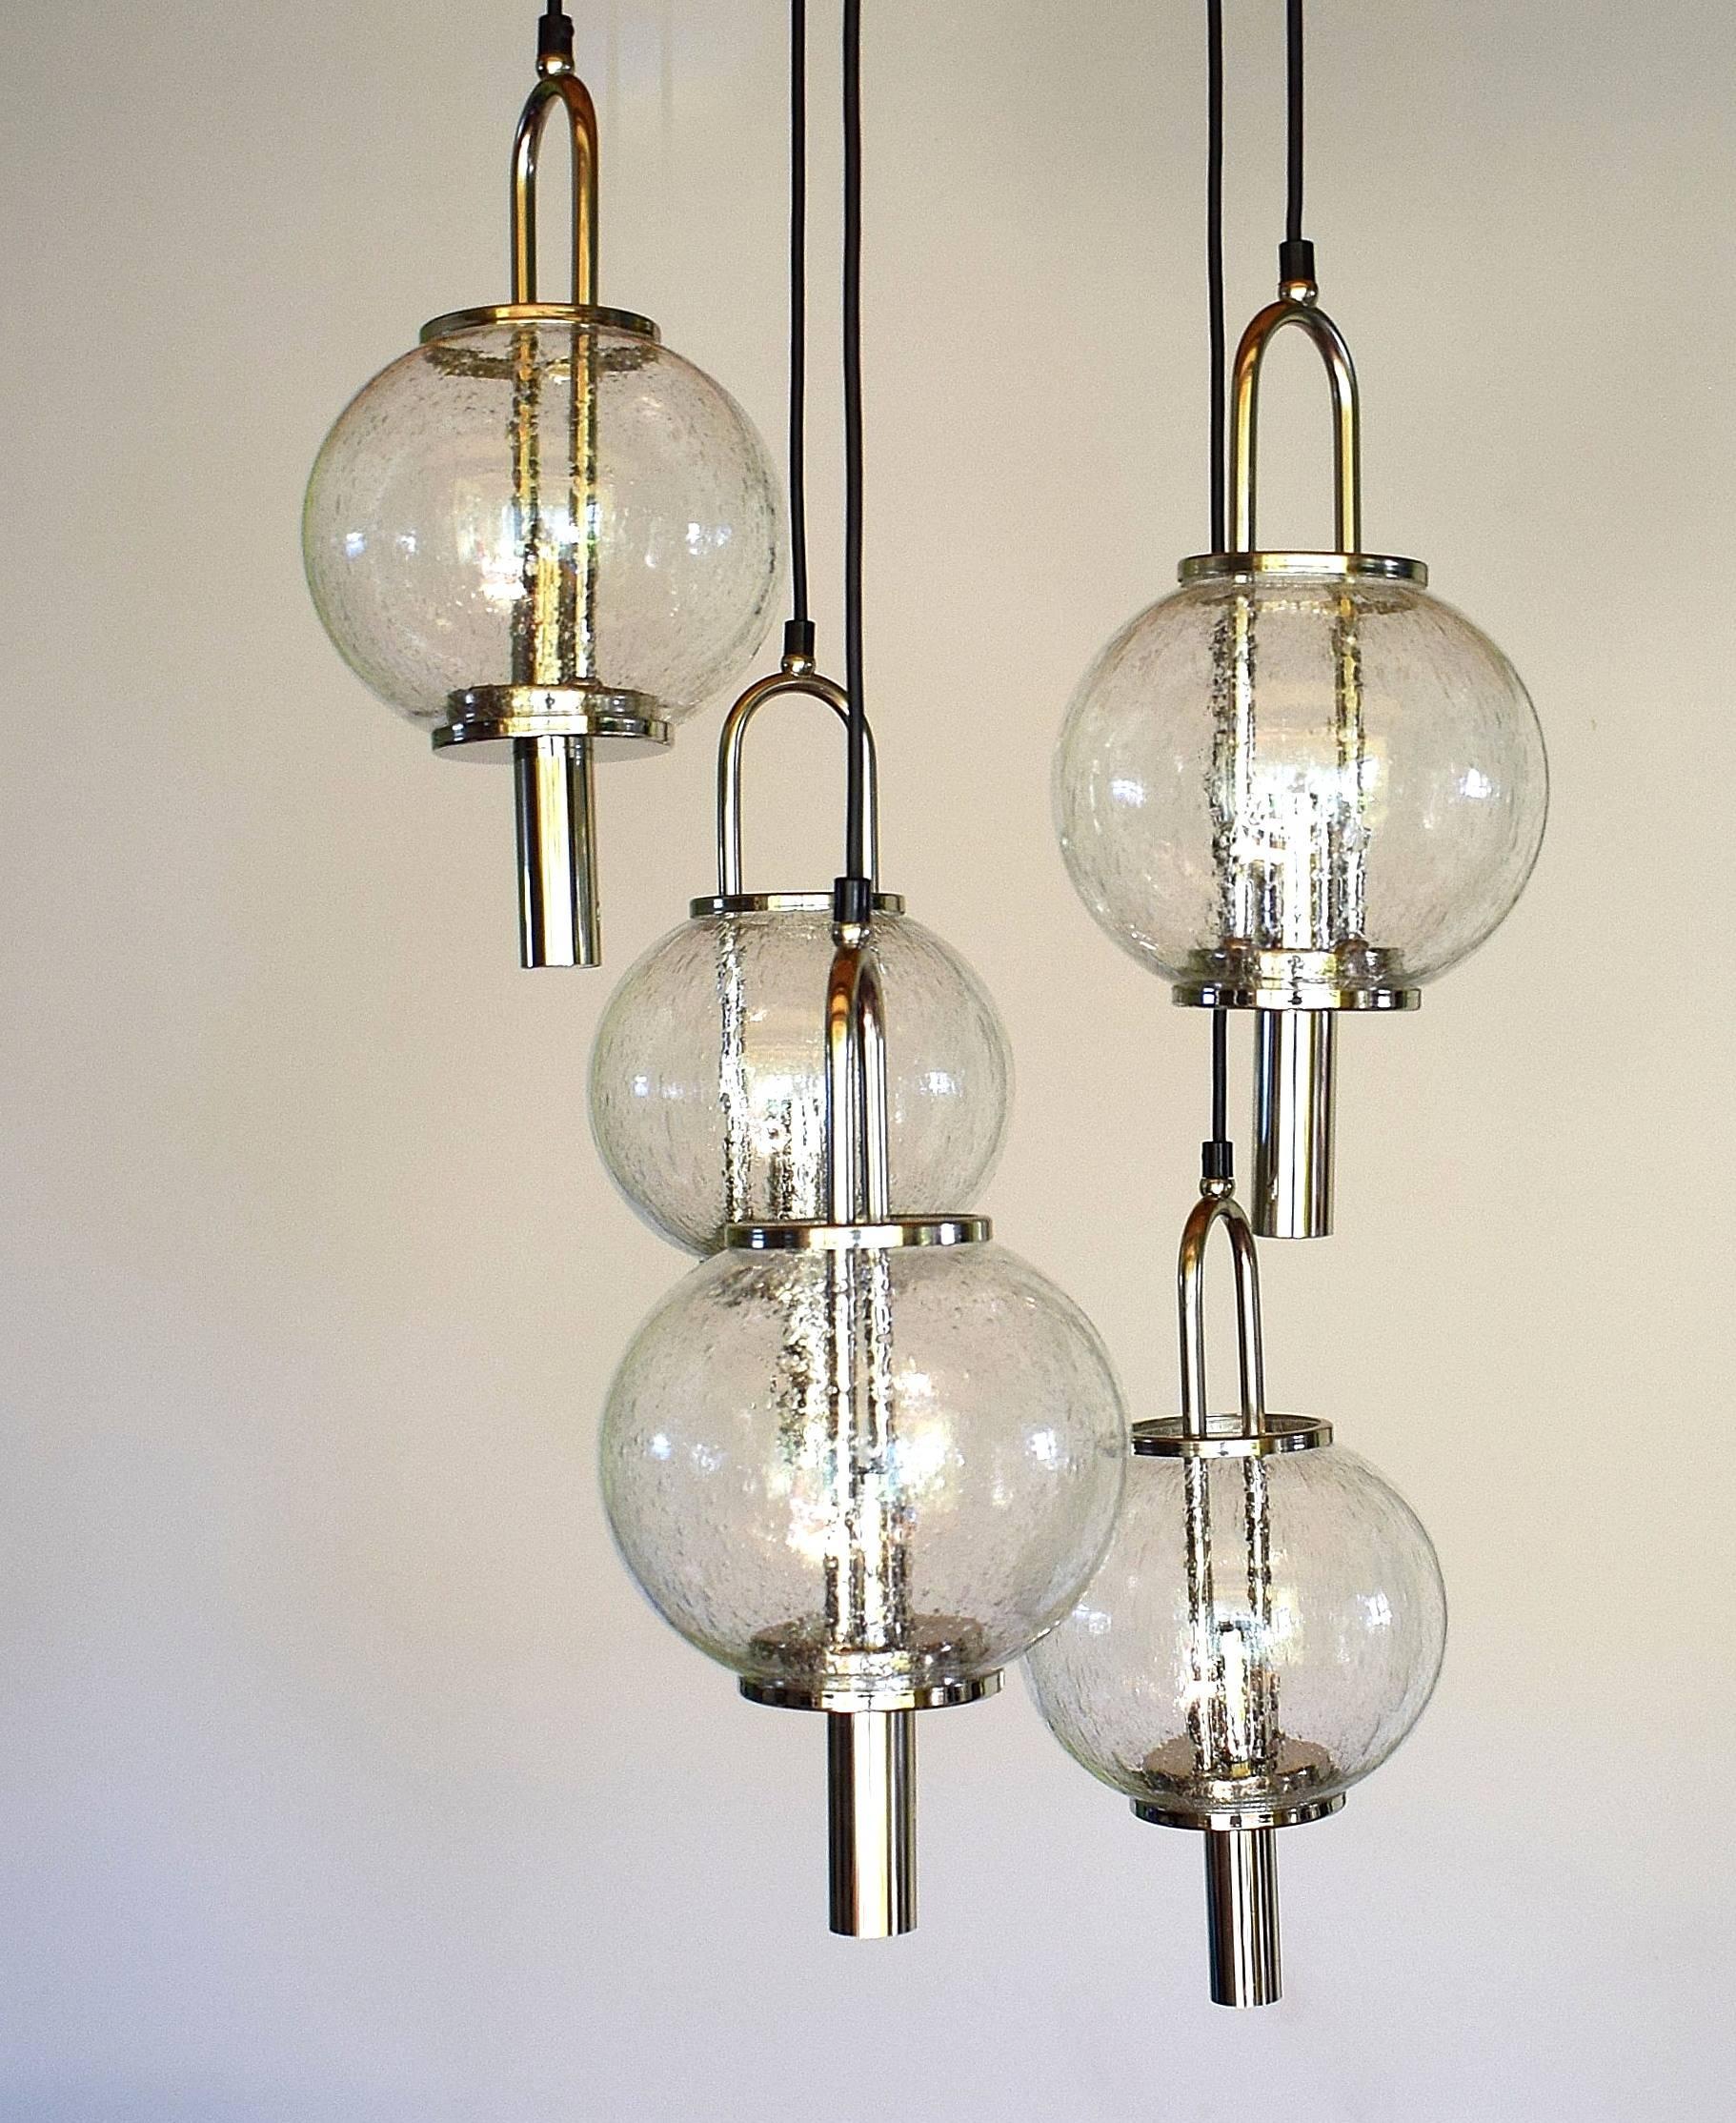 Mid-20th Century Stunning Mid-Century Modernist Glass Ball Chandelier by Kalmar For Sale